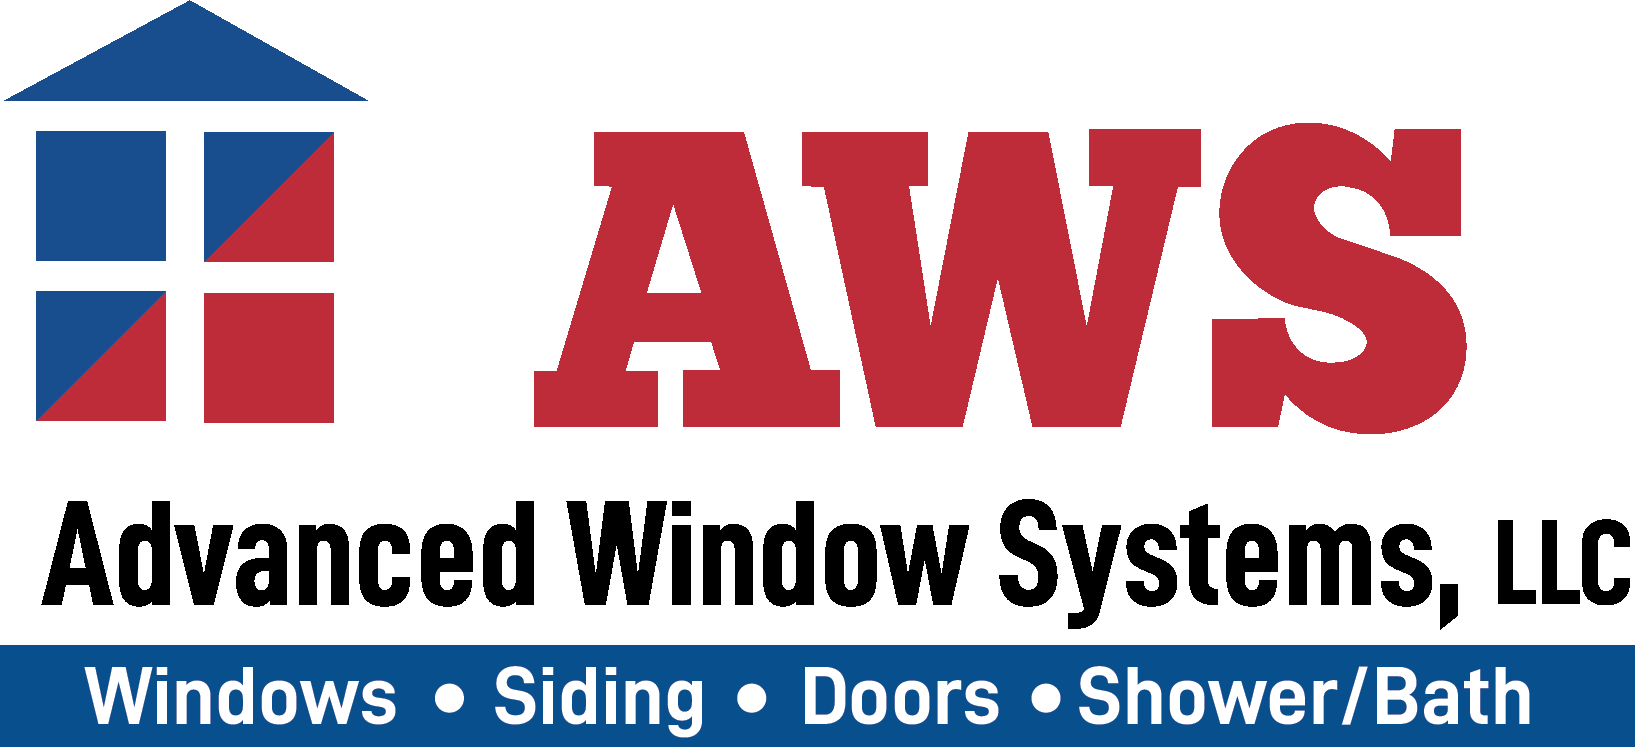 Advance Window System 